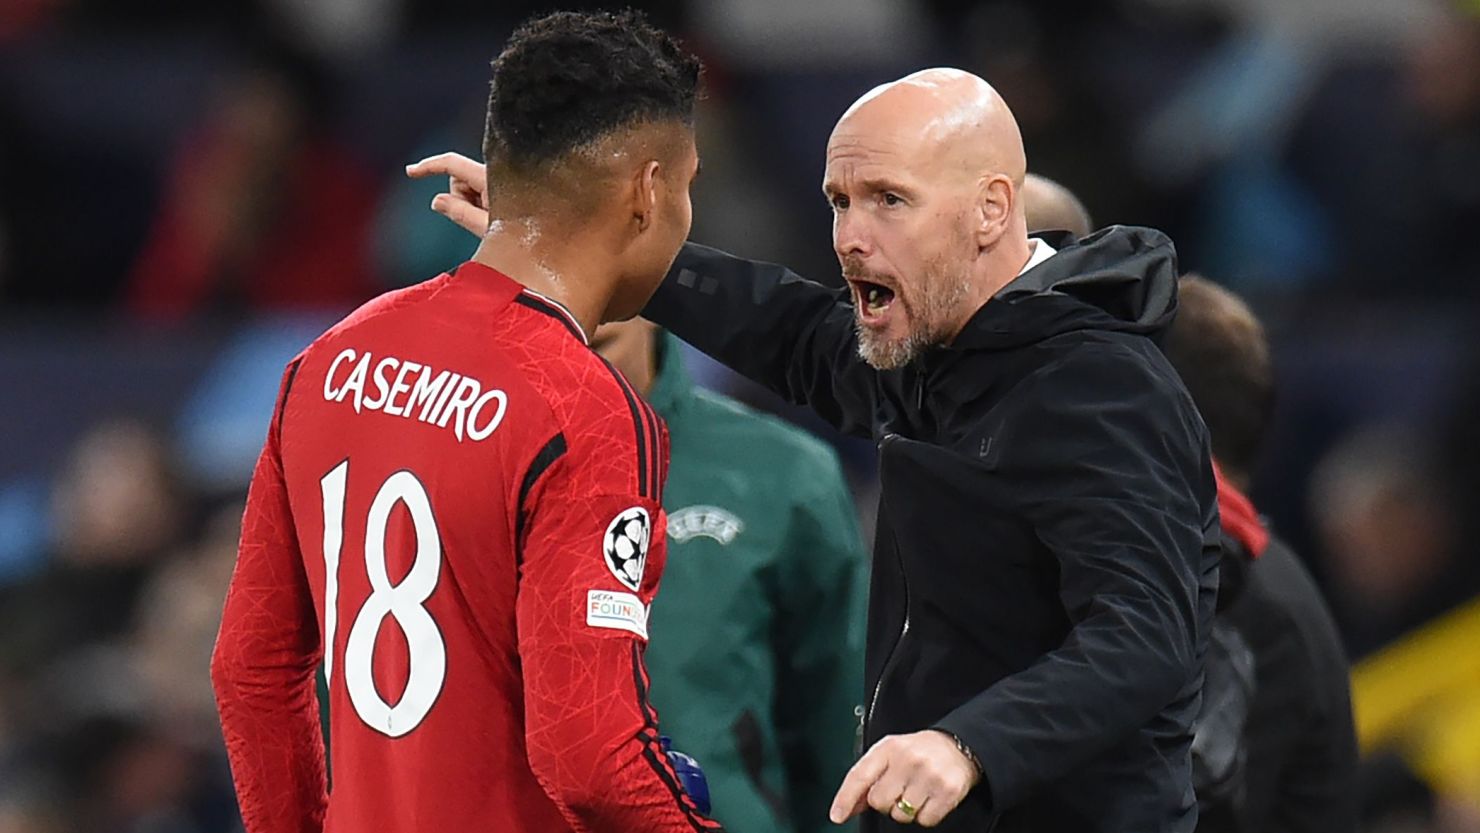 The Casemiro Effect: Manchester United's Midfield Maestro